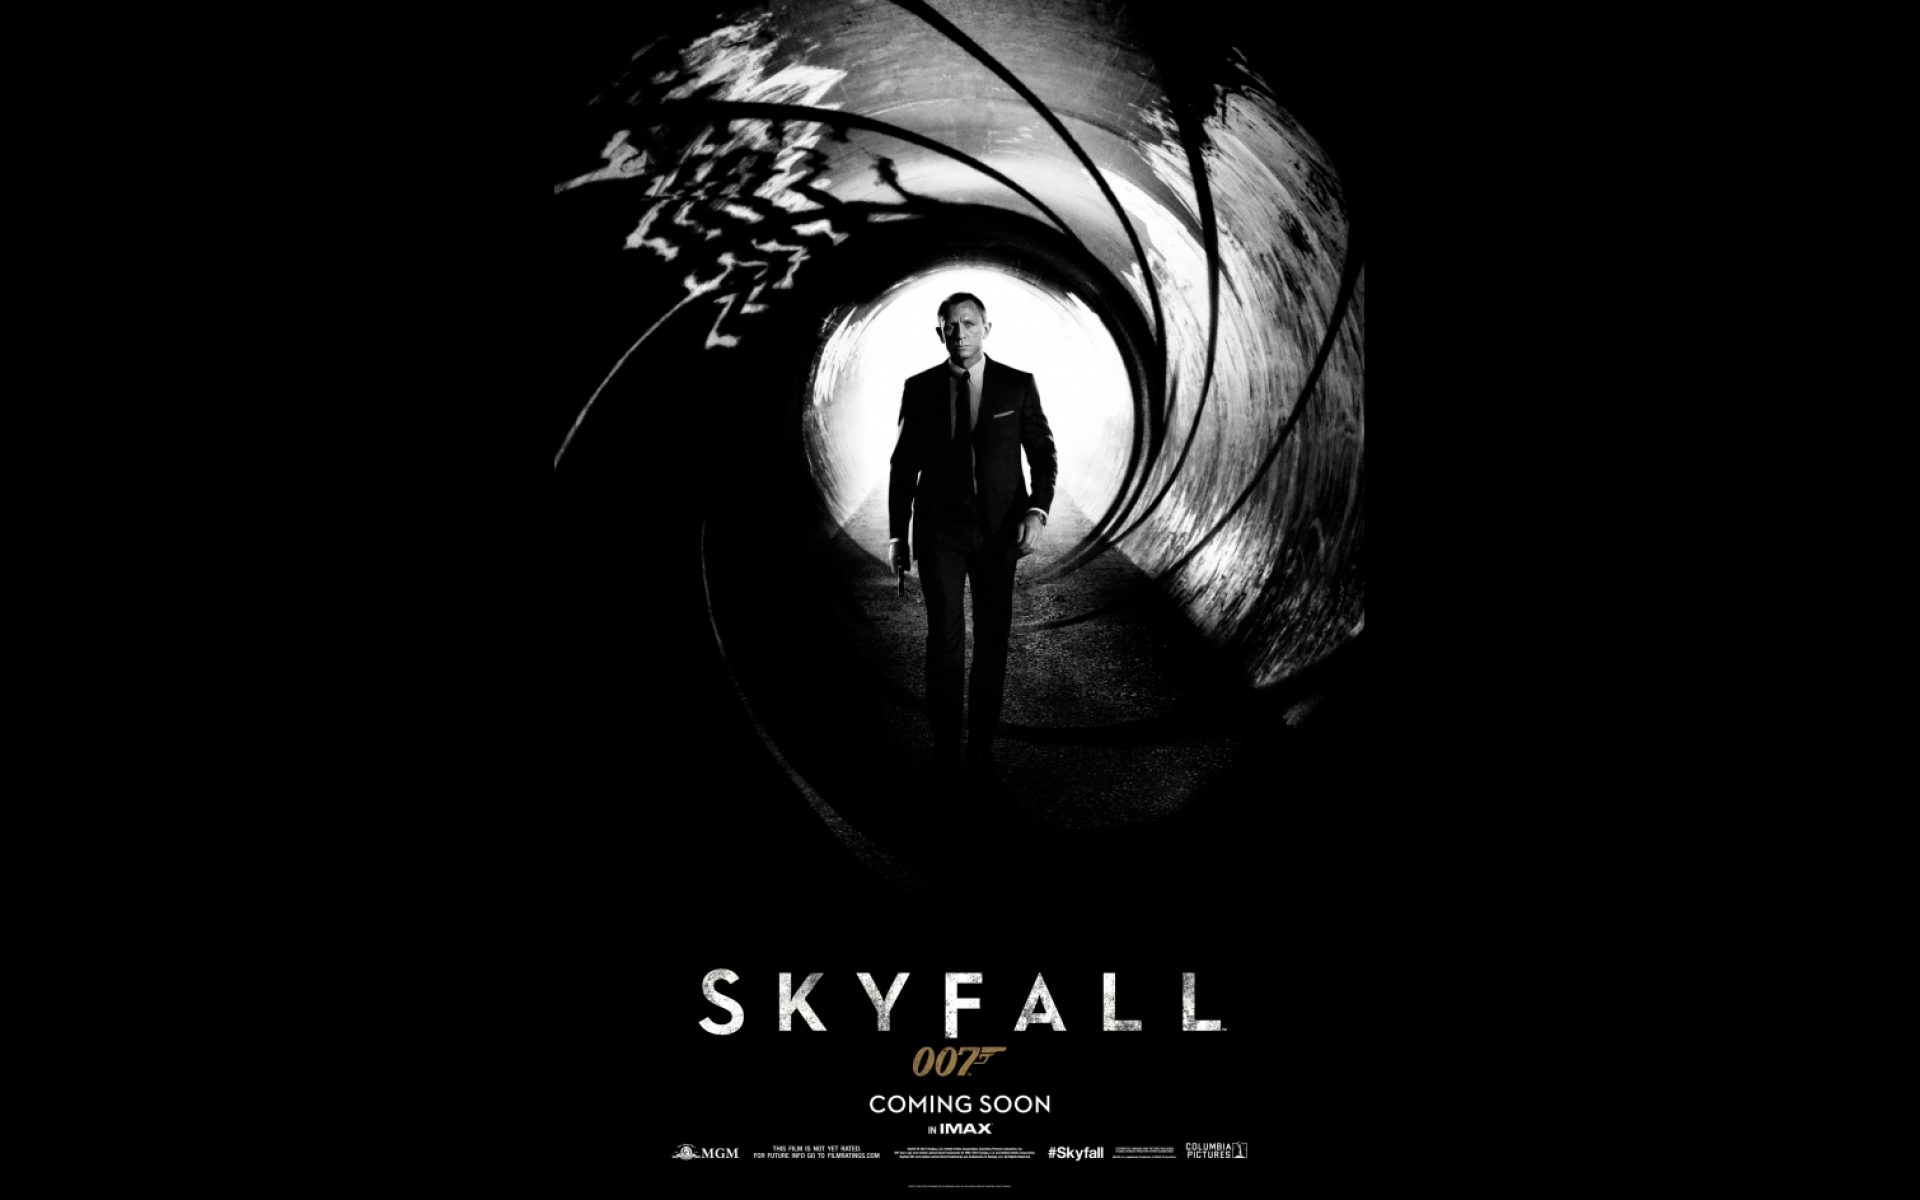 James Bond Movie Posters Wallpaper